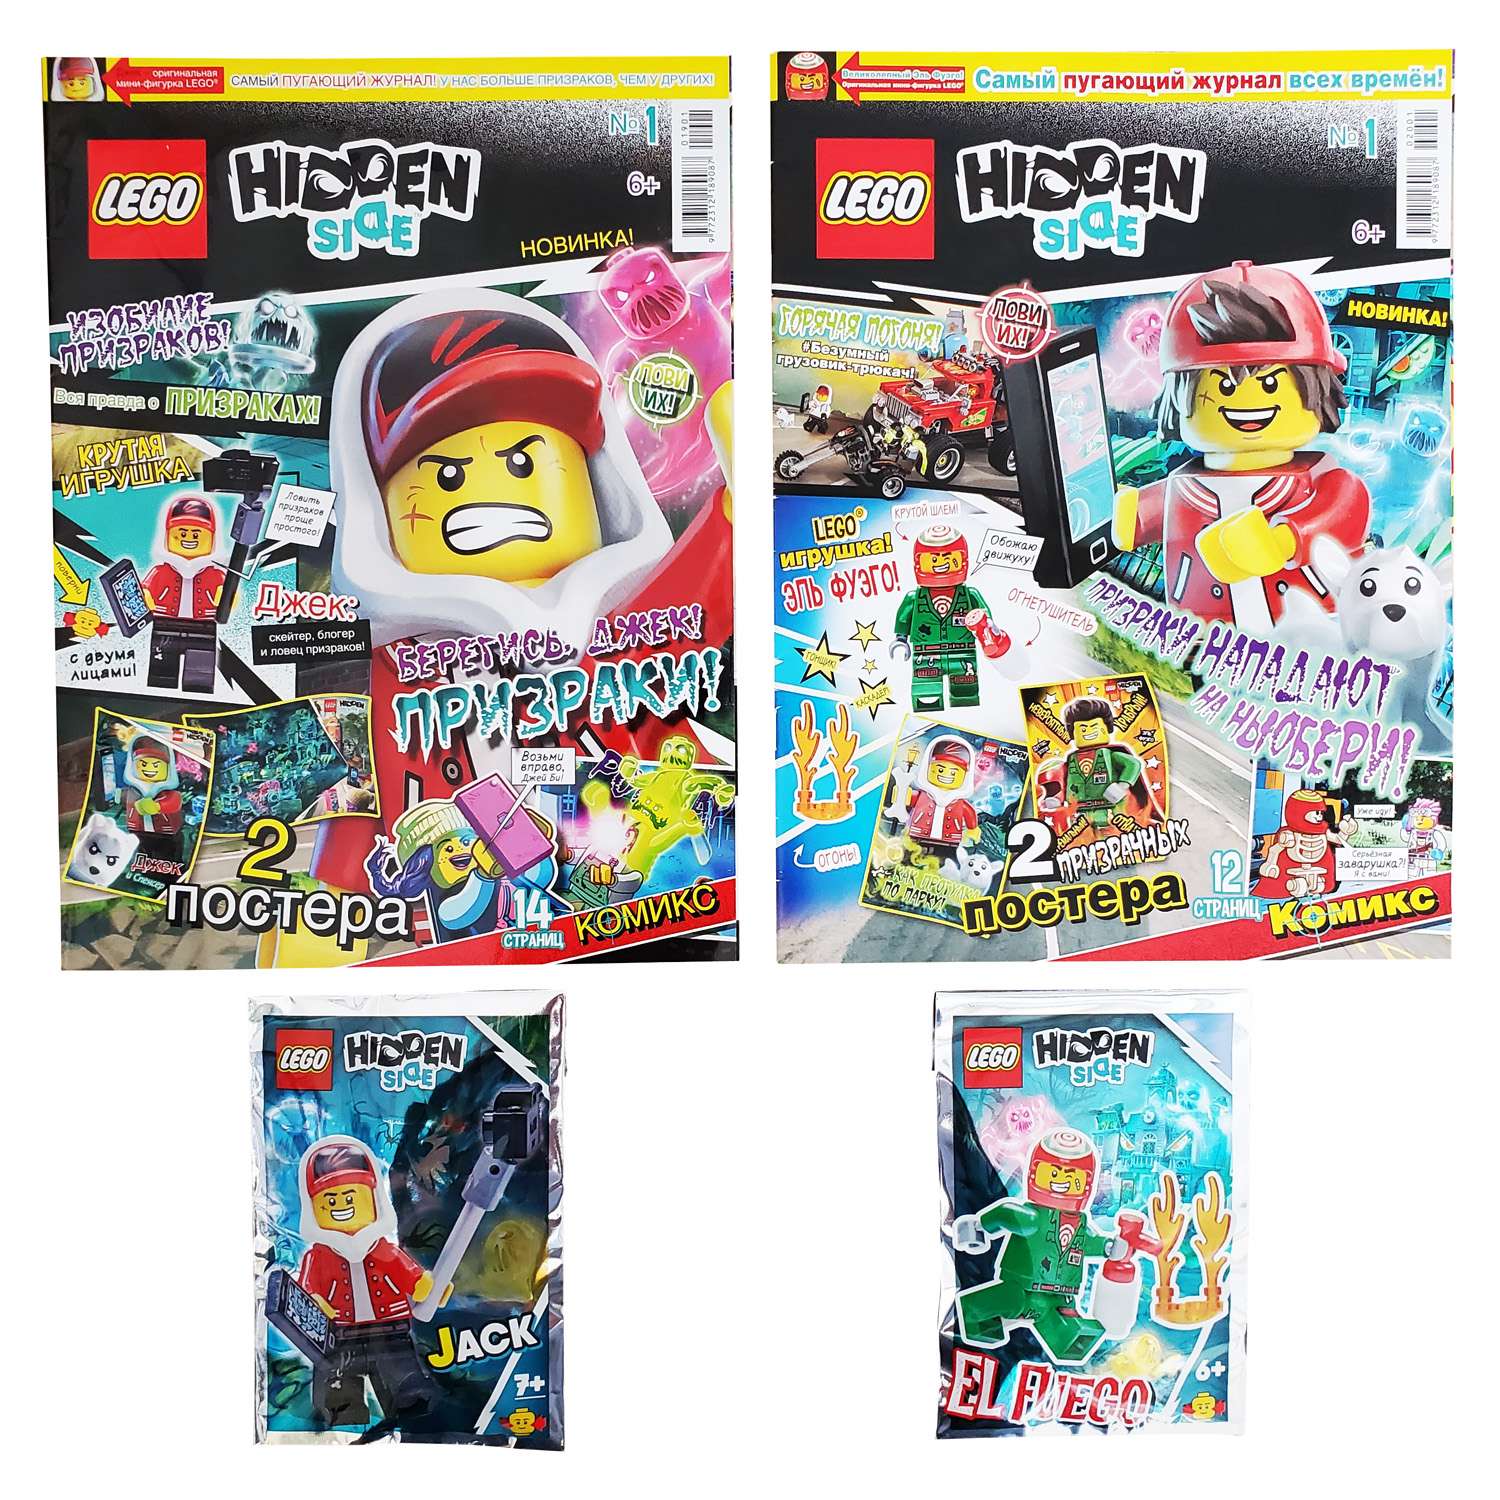 Журнал LEGO Hidden Side 2 по цене 1 - фото 3